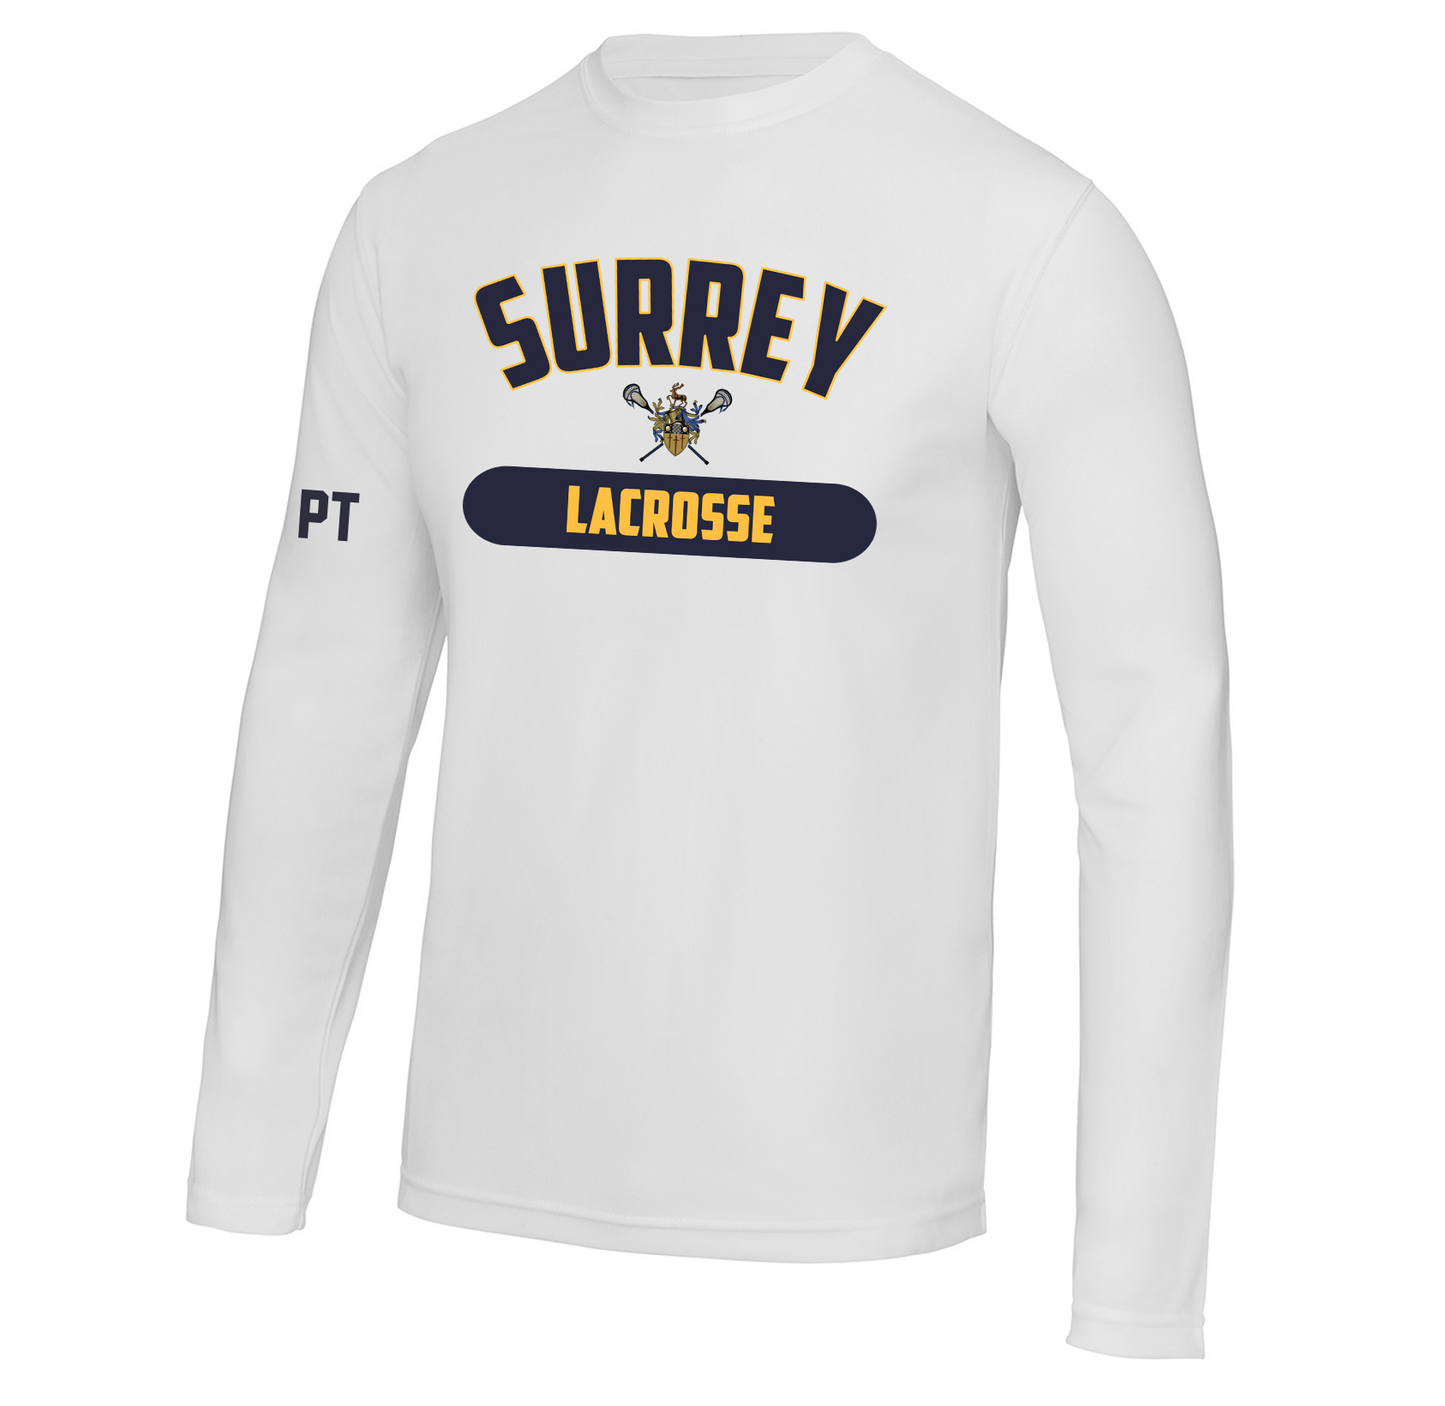 Uni of Surrey Lacrosse Long Sleeve Tech Tee